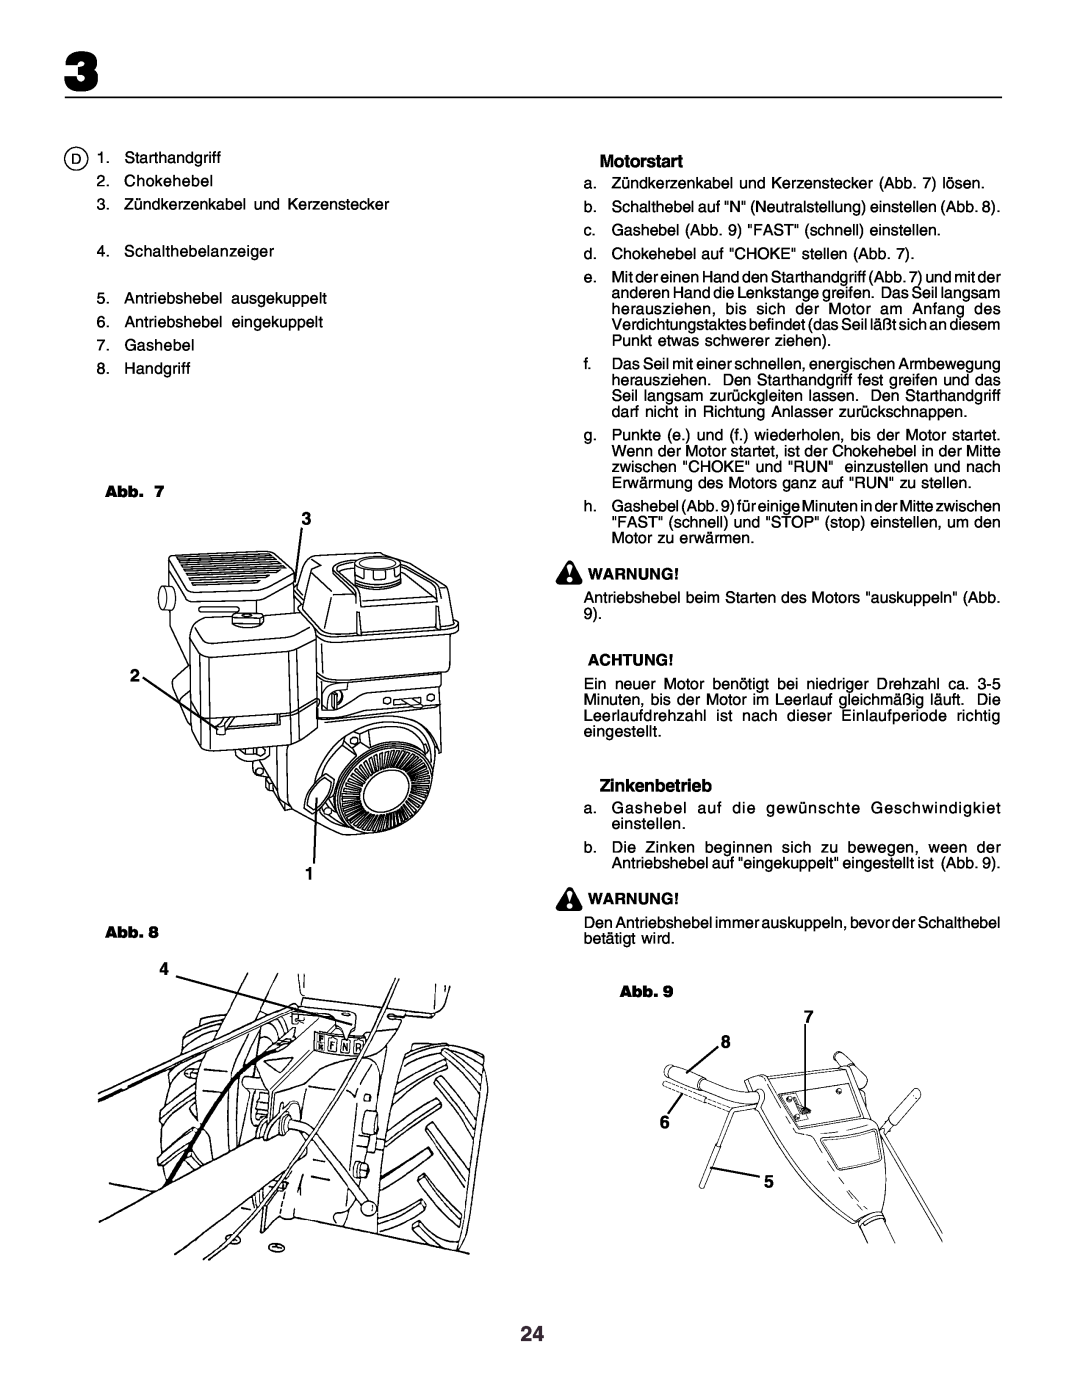 Husqvarna crt51 instruction manual Abb, Warnung, Achtung 